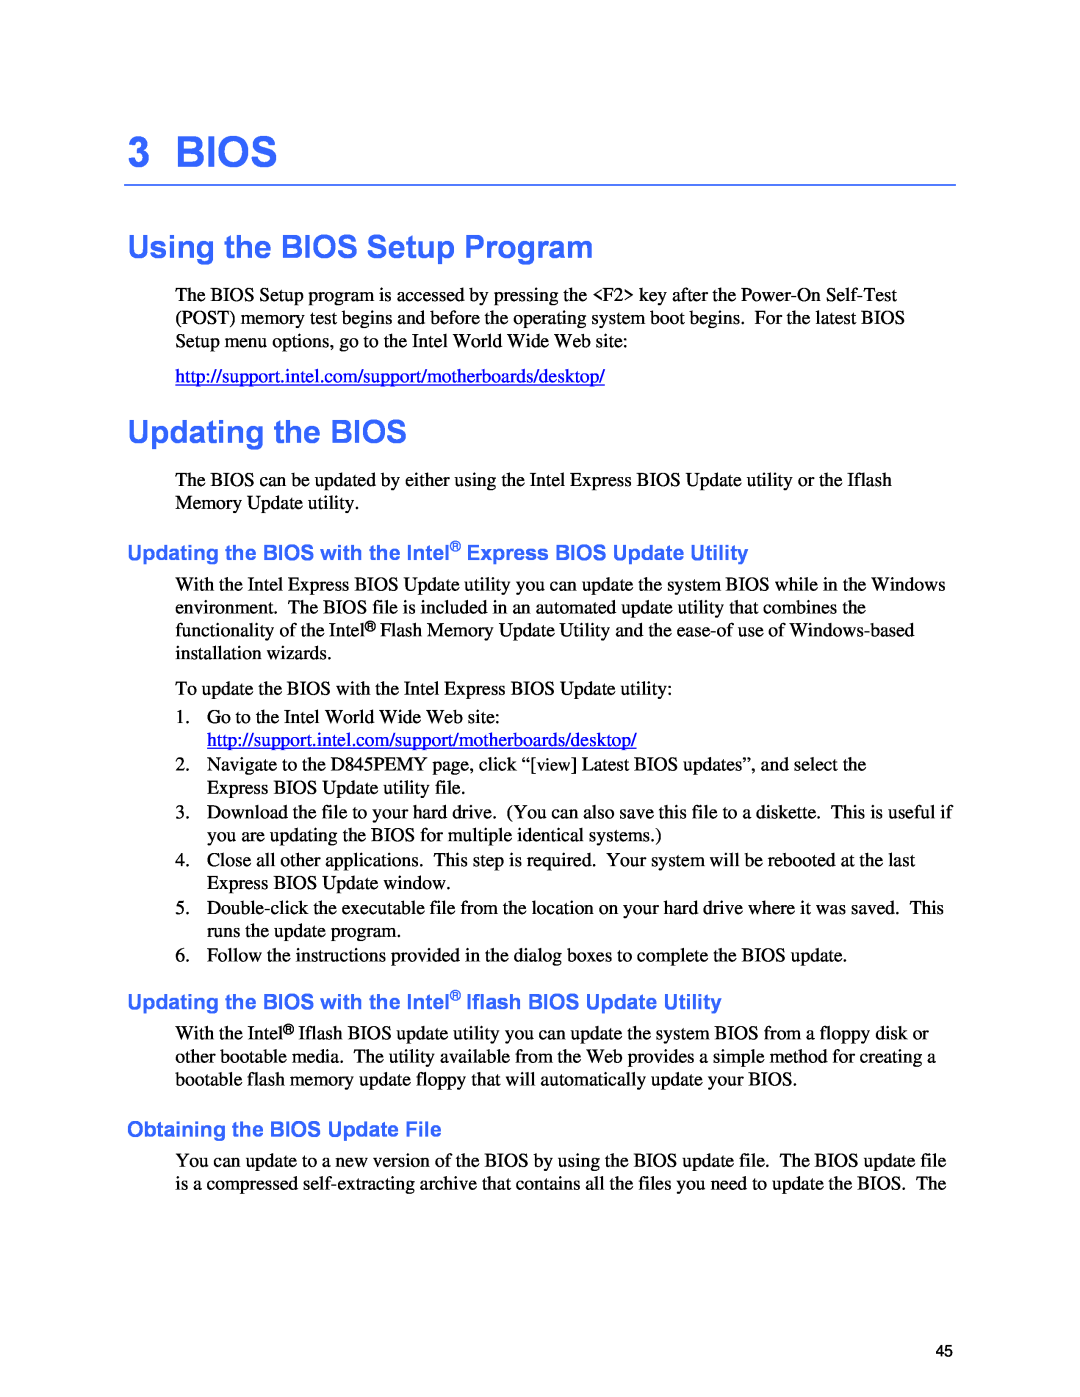 Intel D845PEMY manual Bios, Using the BIOS Setup Program, Updating the BIOS, Obtaining the BIOS Update File 